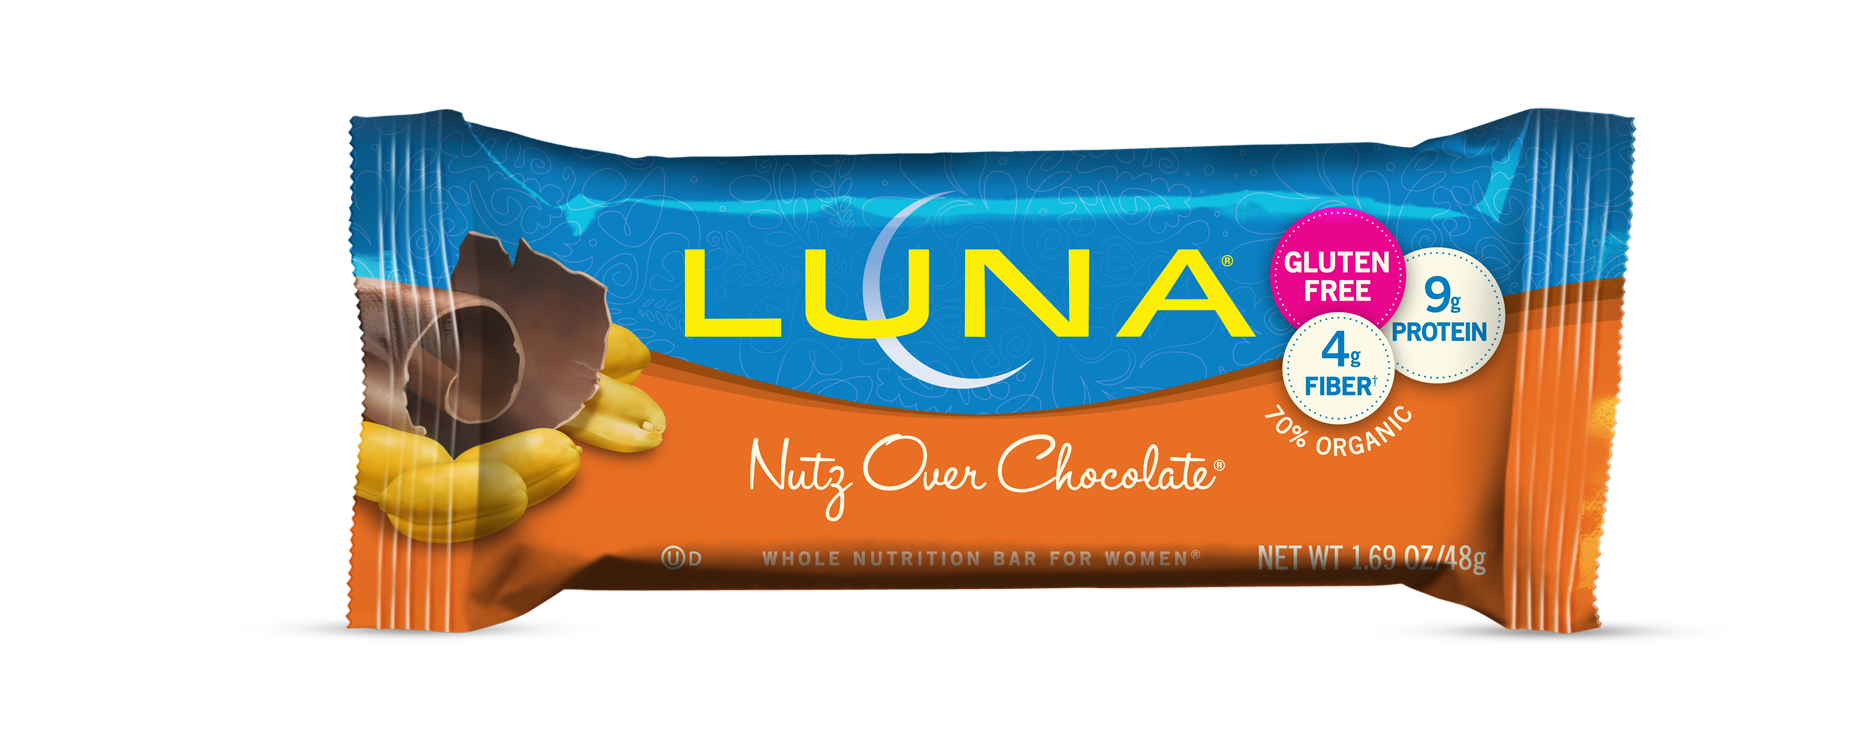 Luna Nuts Over Chocolate